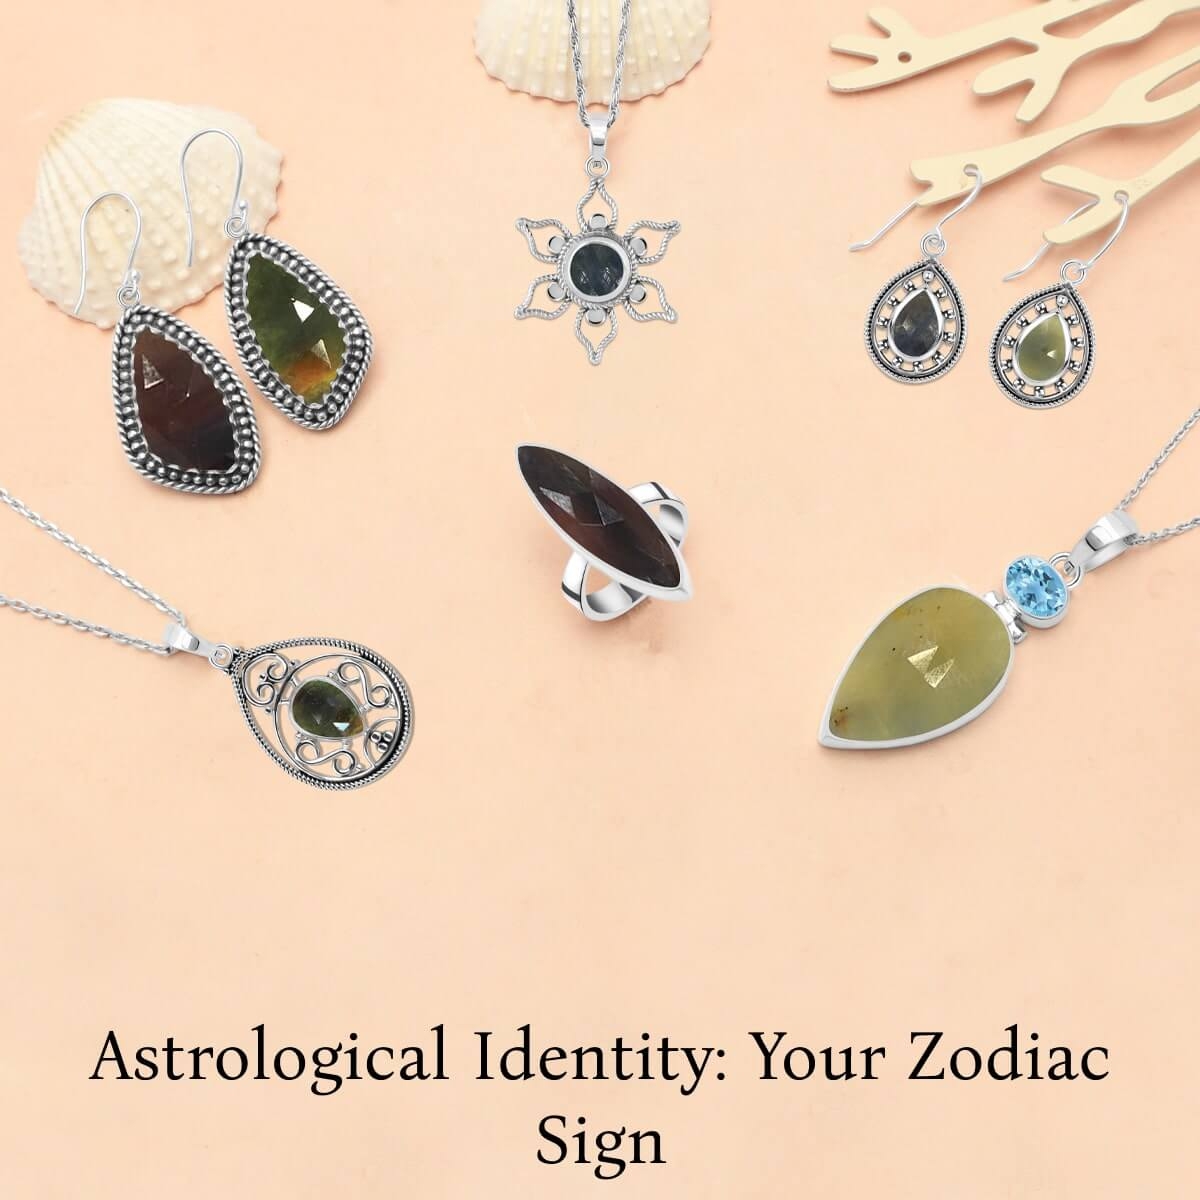 Zodiac sign of Sapphire